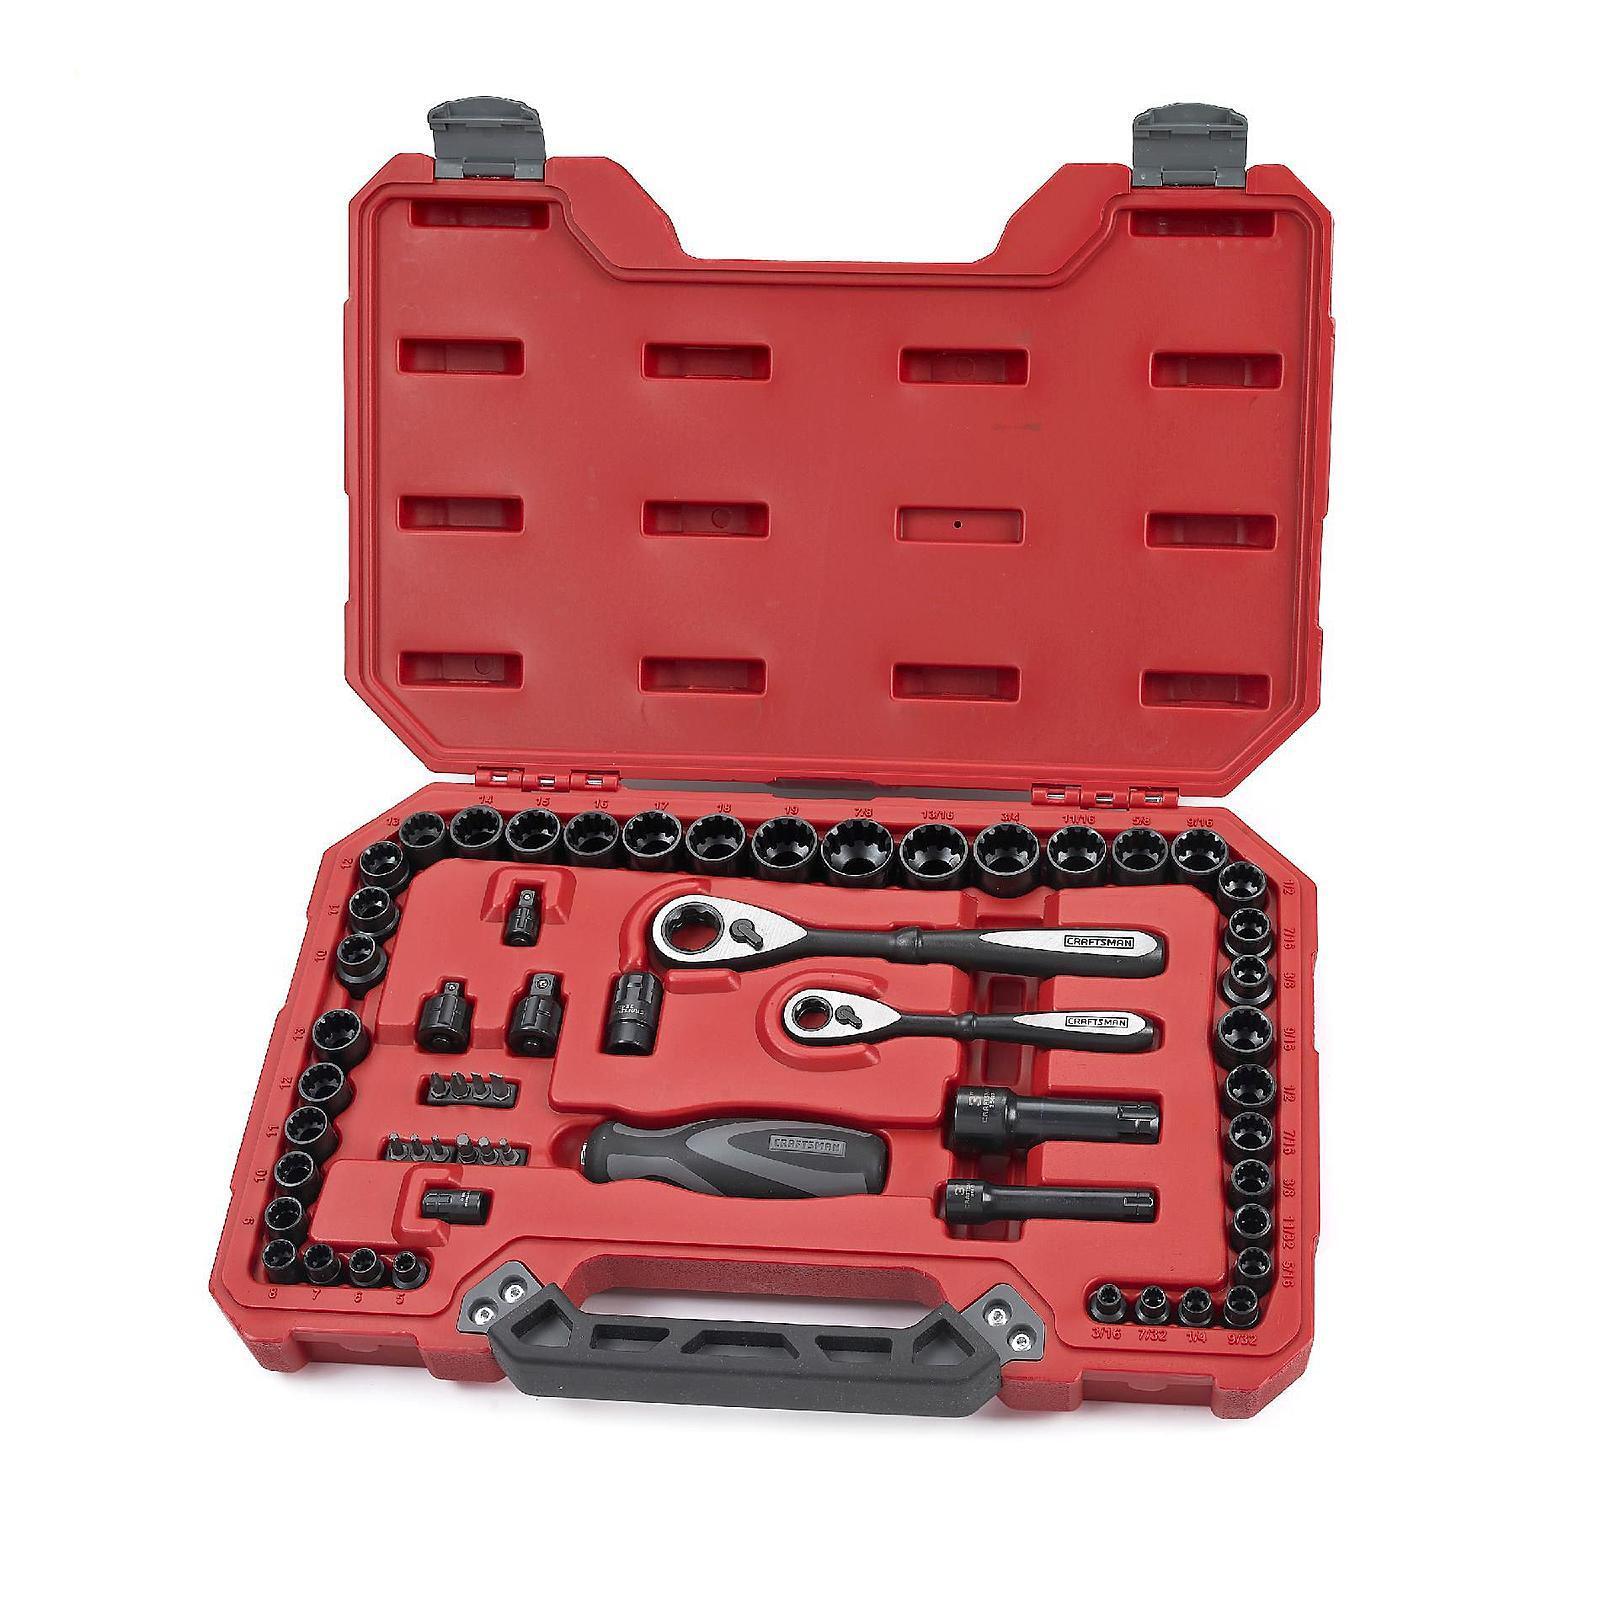 NEW Craftsman 58 pc Universal Max Axess Mechanics Tool Set with Case Craftsman 935430